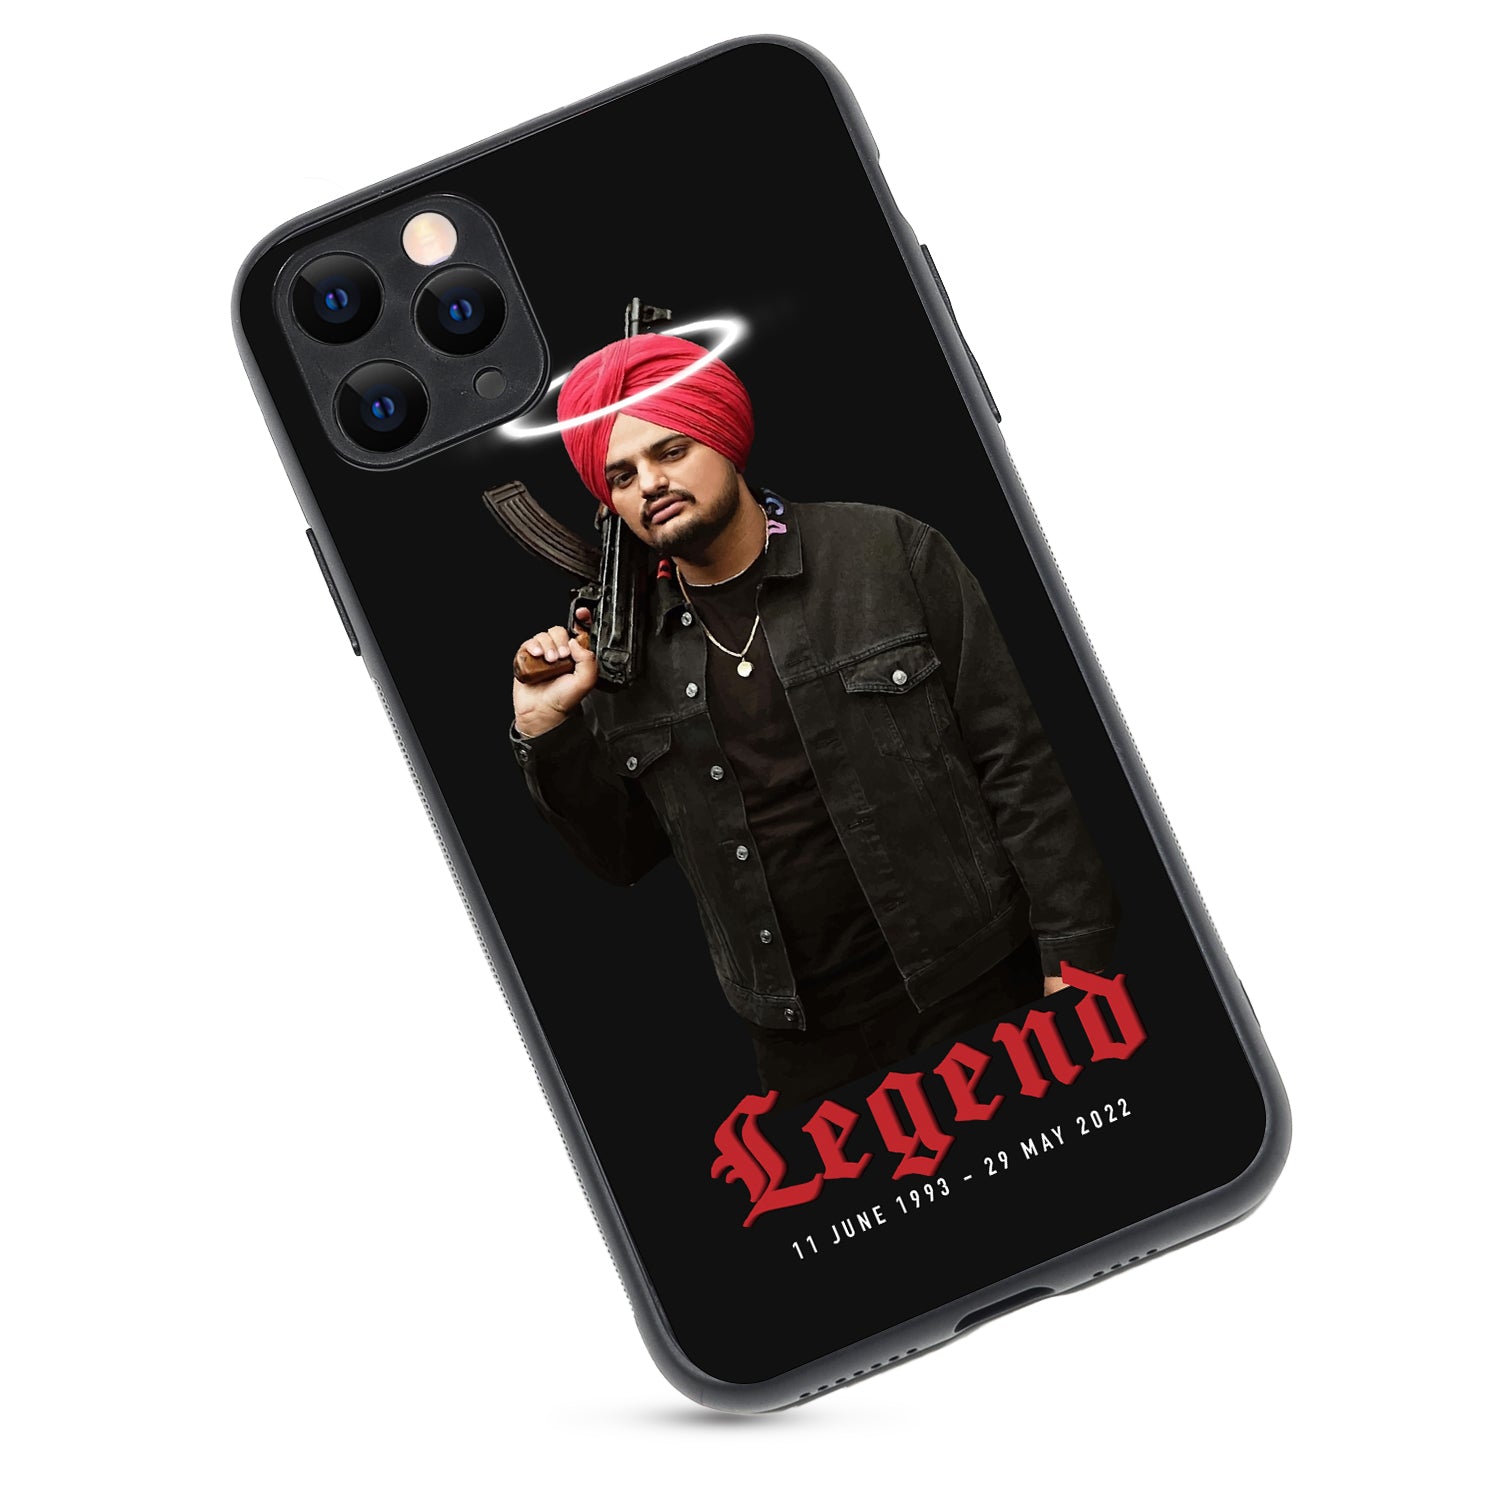 Legend 2.0 Sidhu Moosewala iPhone 11 Pro Max Case